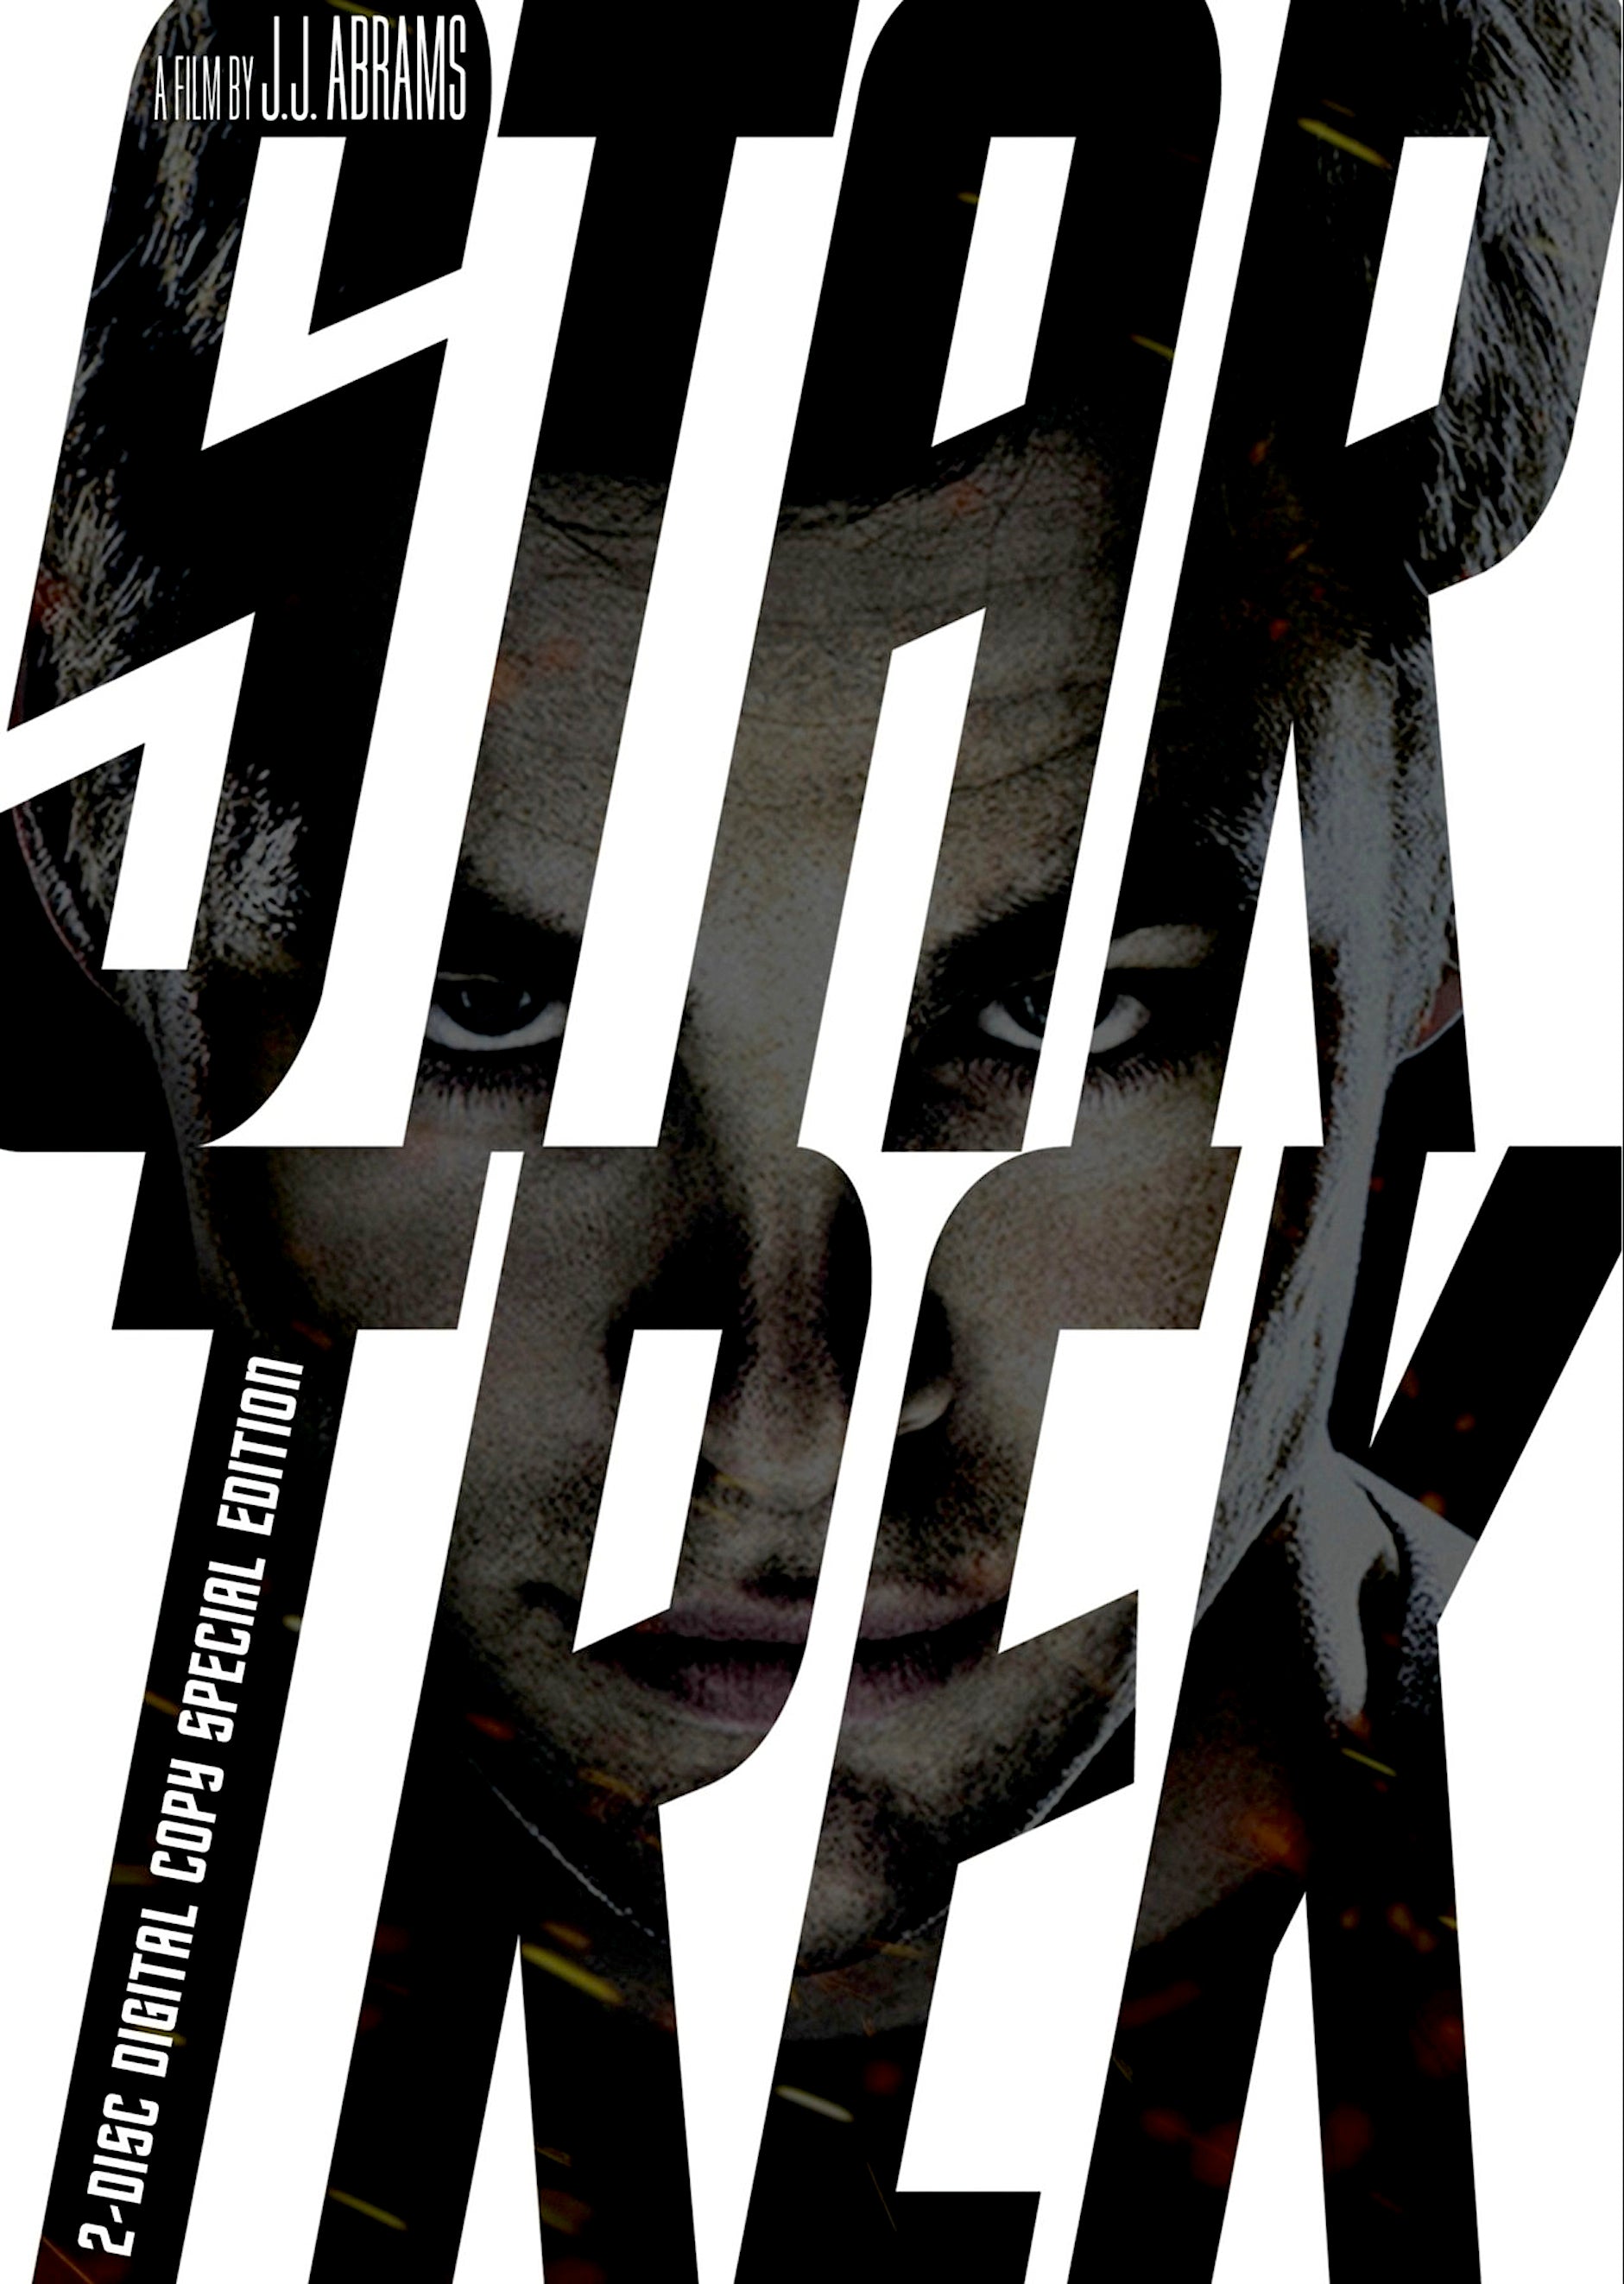 STAR TREK (2-DISC SPECIAL EDITION) DVD